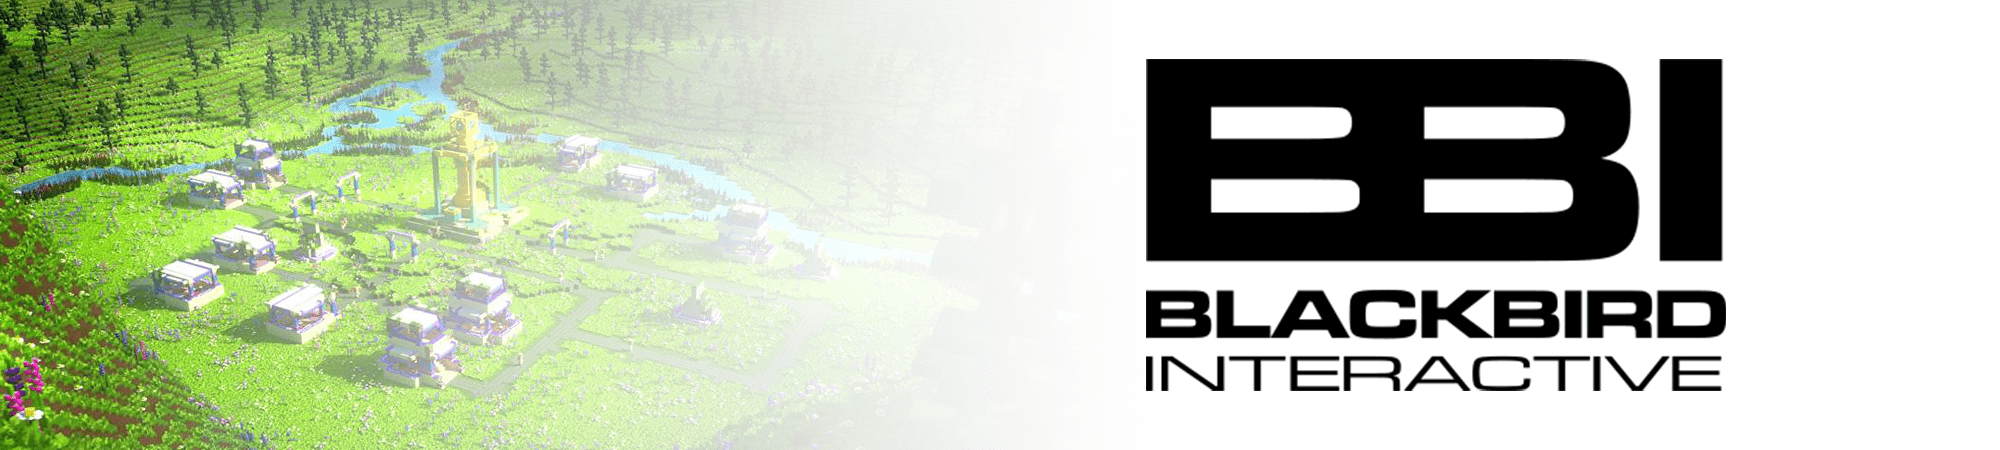 Blackbird Interactive Banner